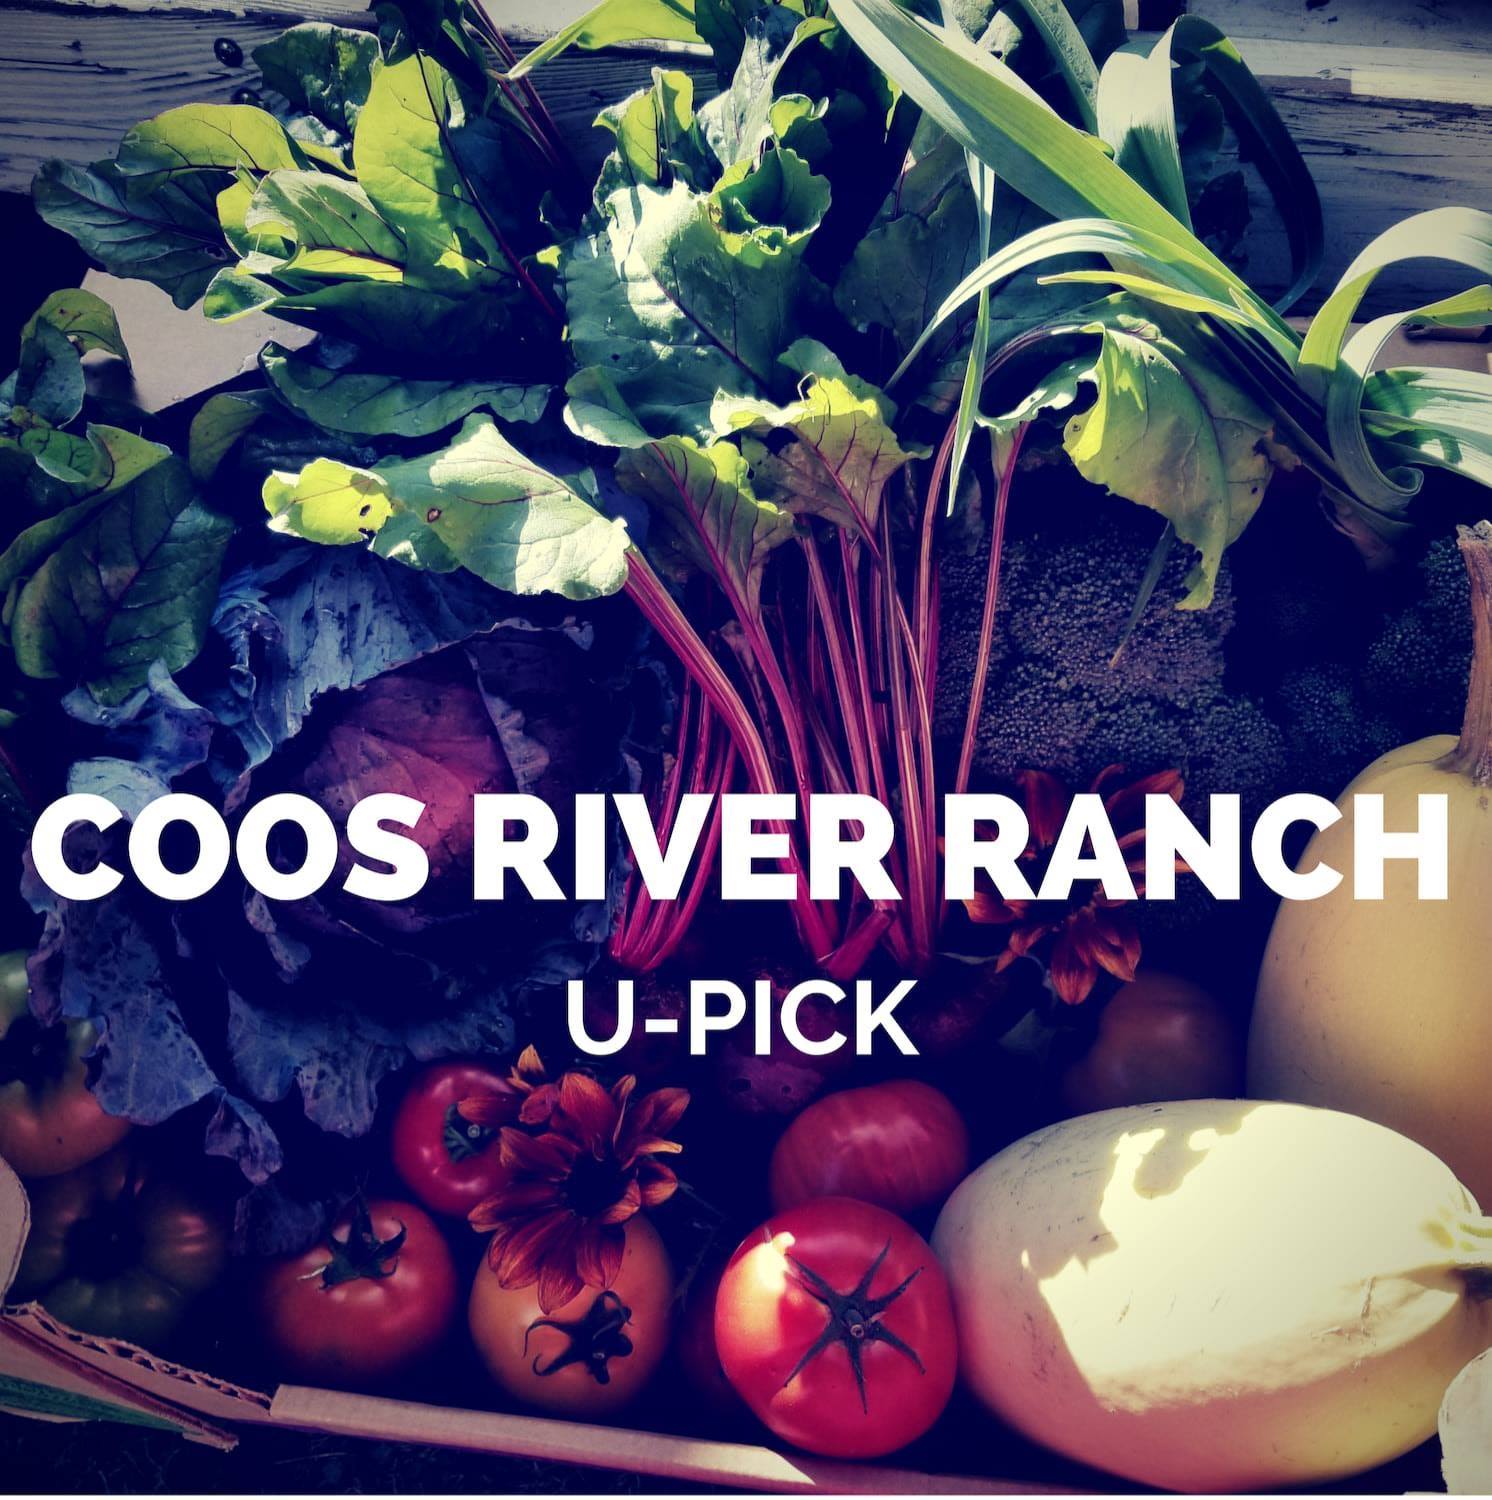 coos river ranch_upick image.jpg